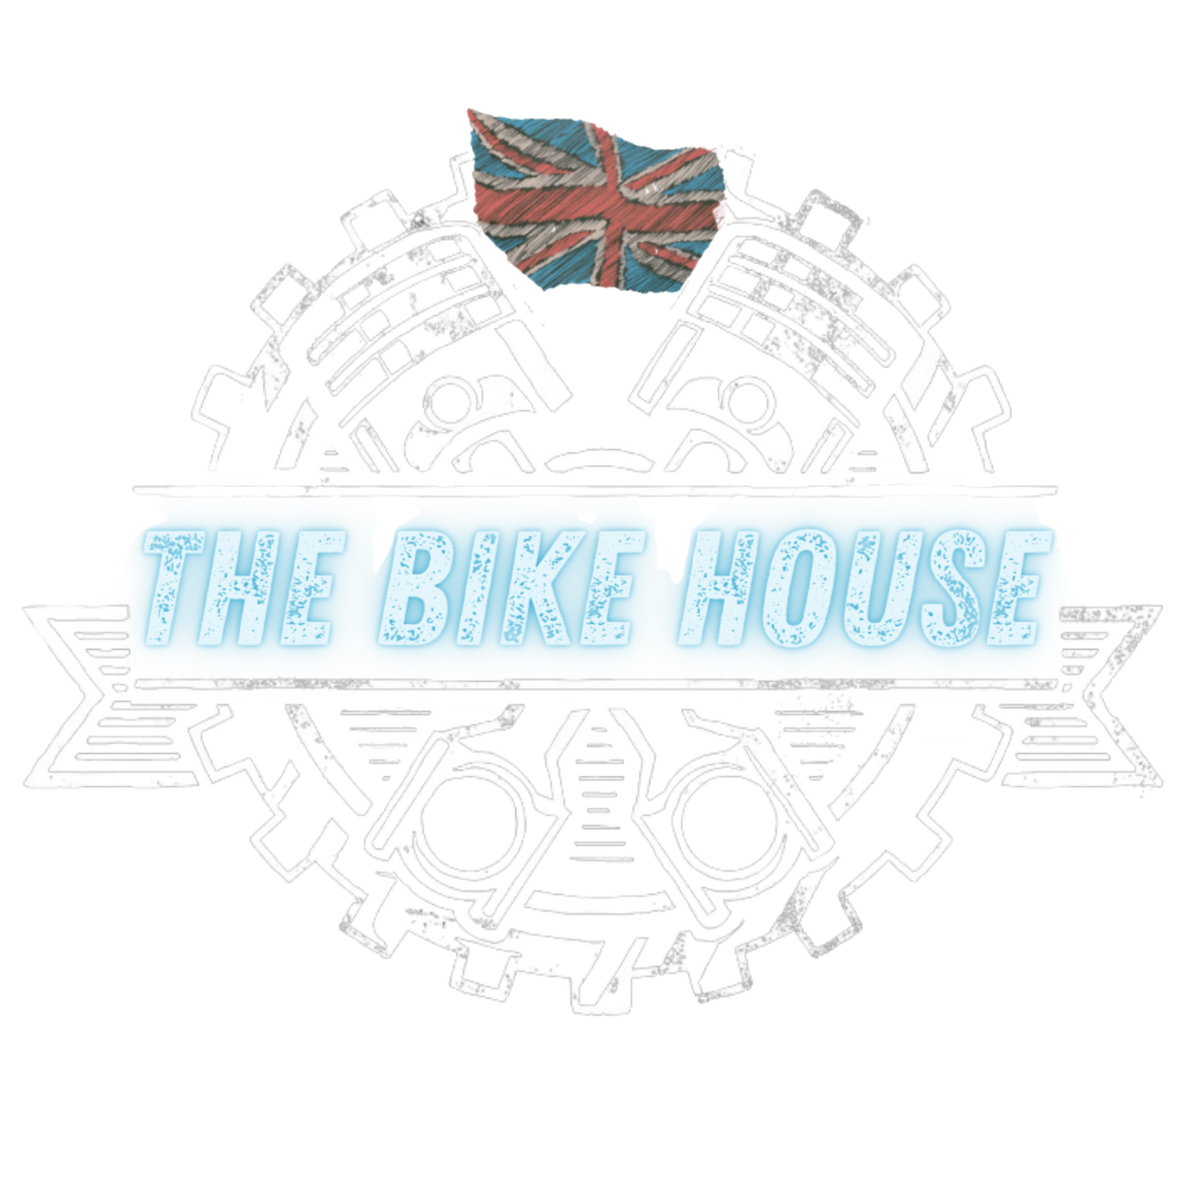 KTM 14-16 Clutch levers
– The Bike House 1